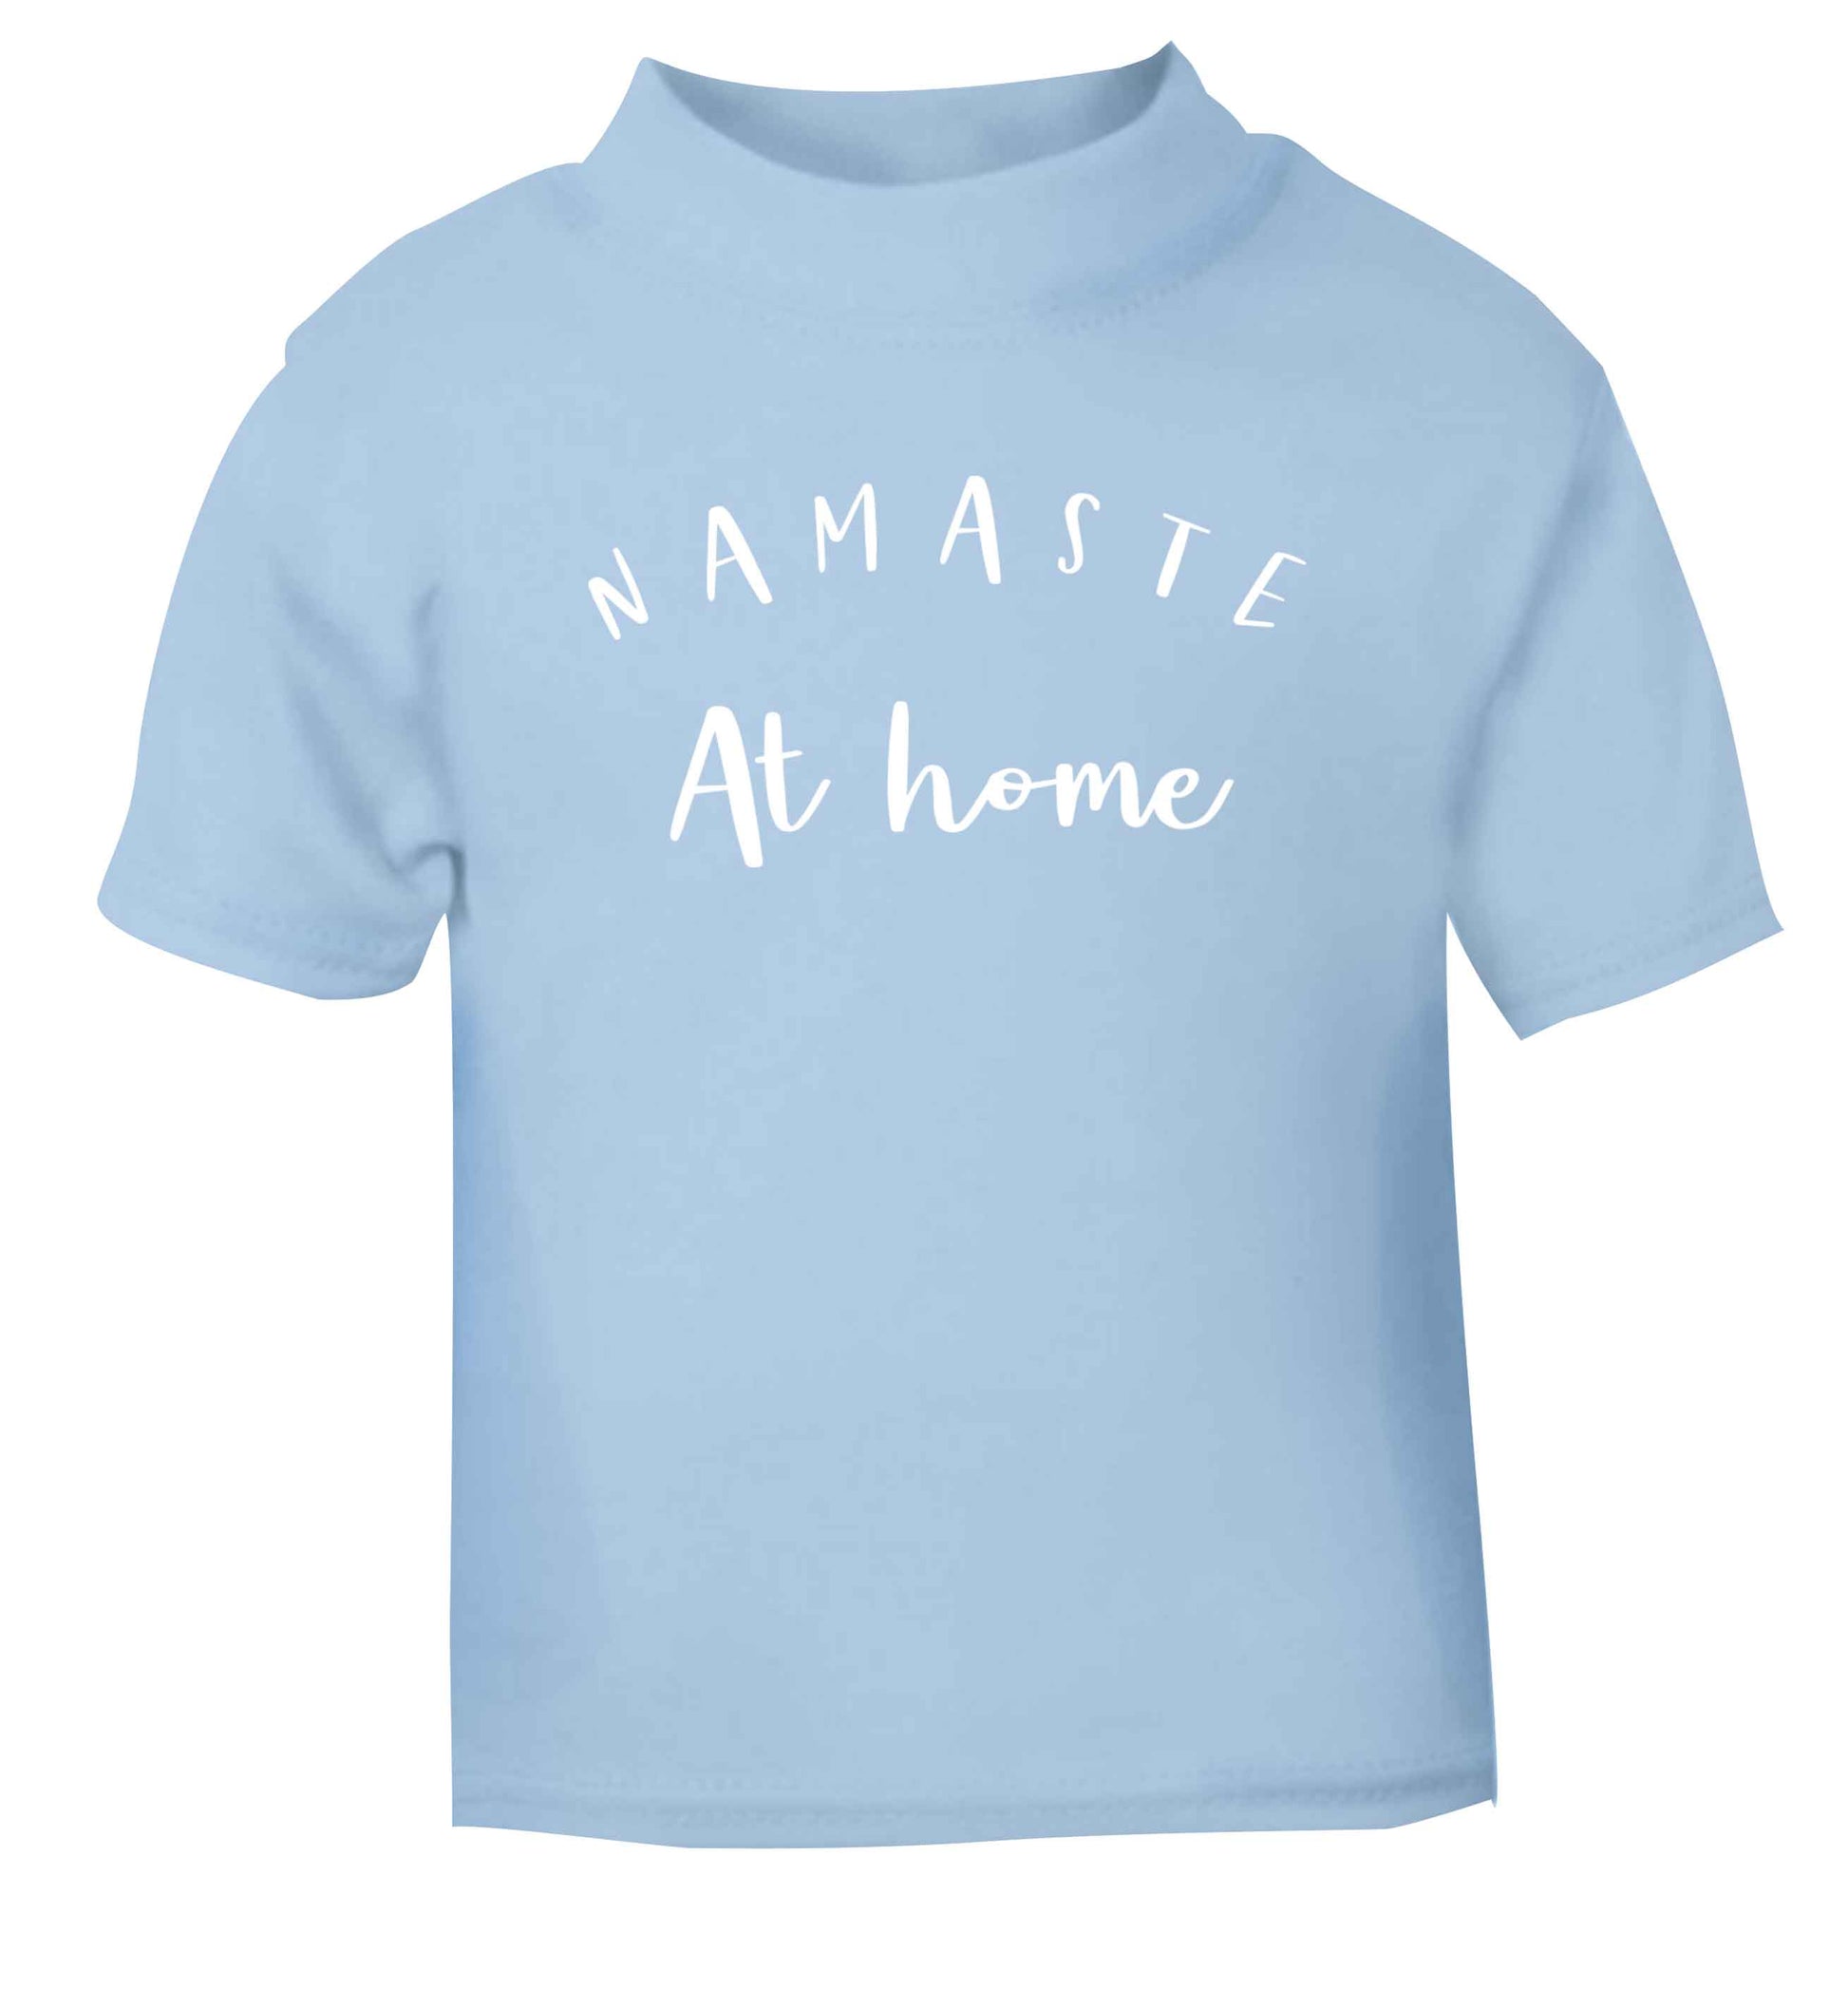 Namaste at home light blue Baby Toddler Tshirt 2 Years